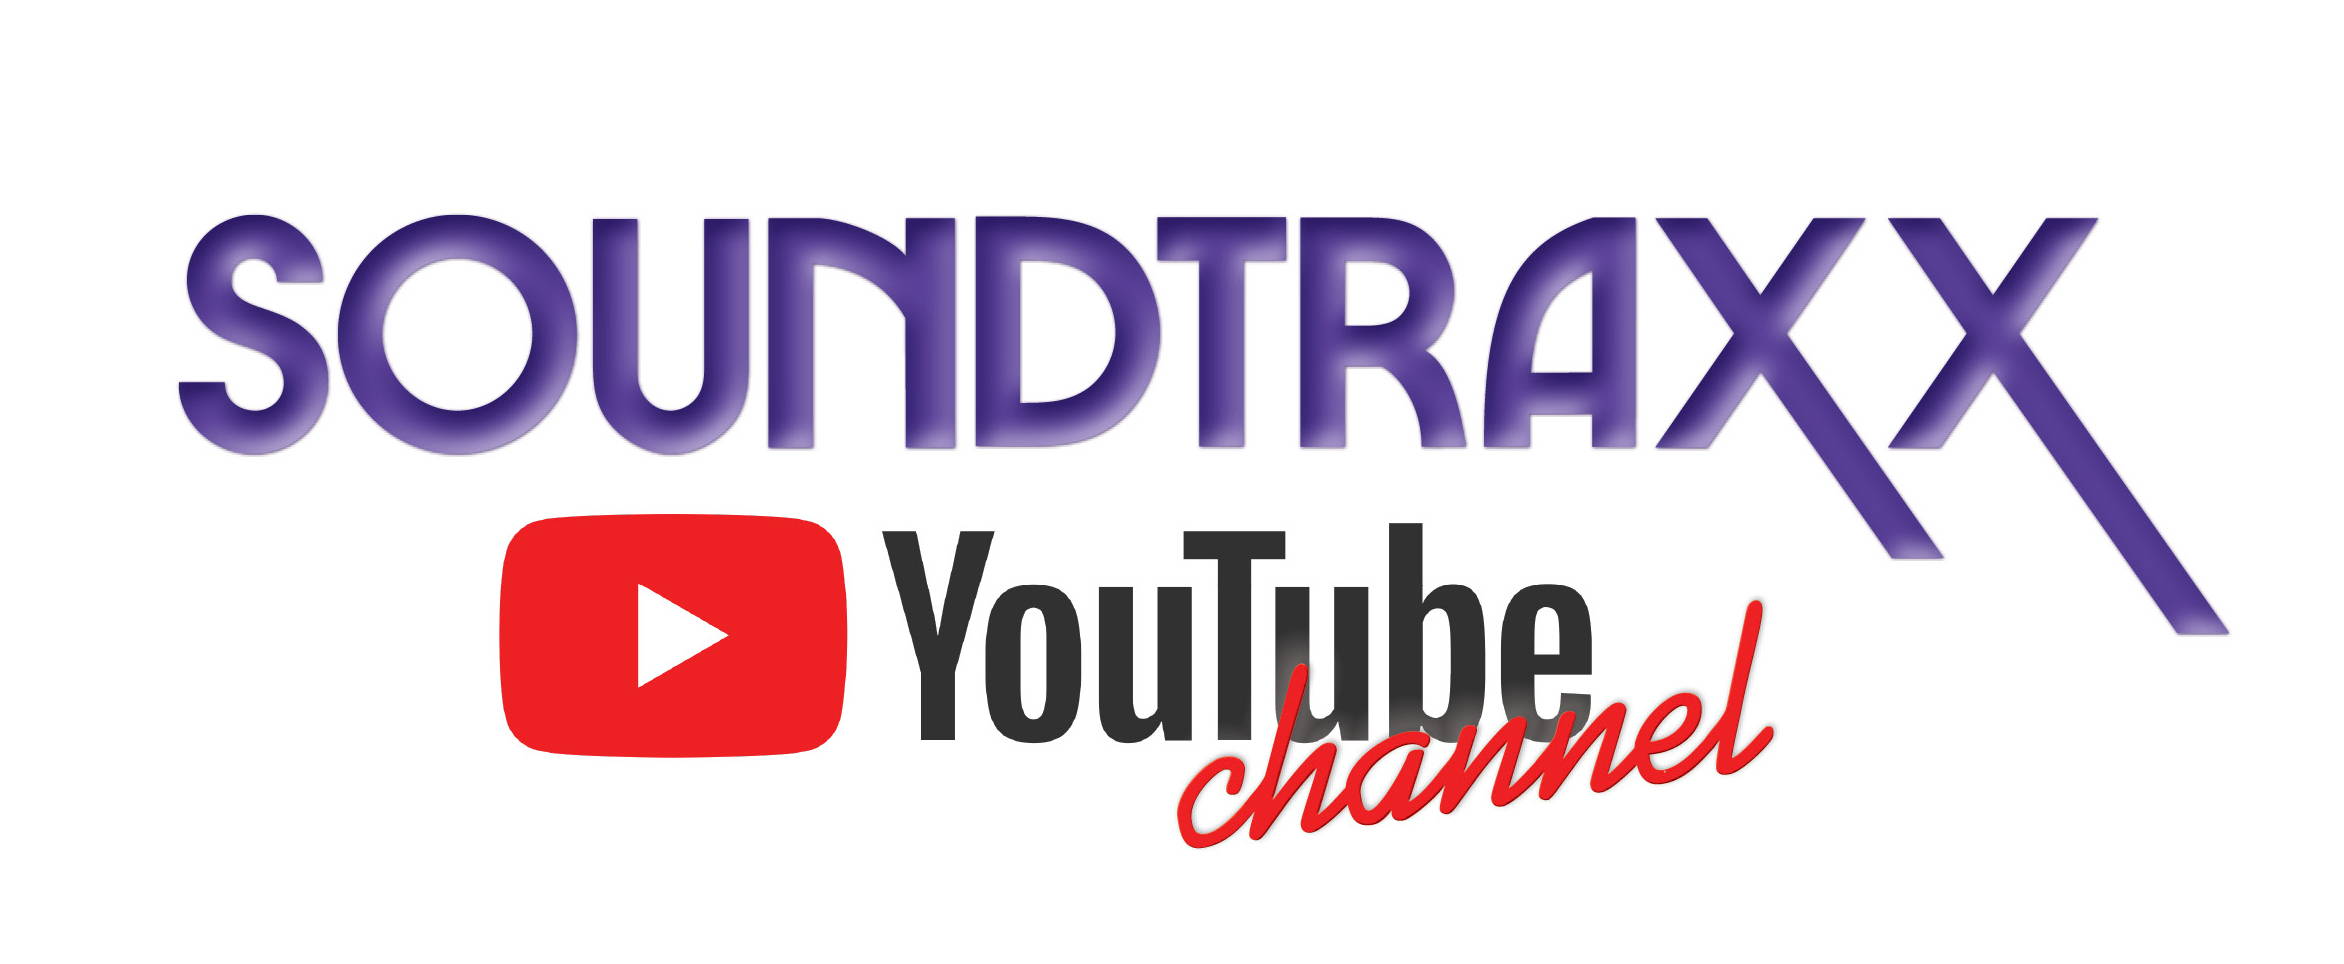 SoundTraxx YouTube Channel